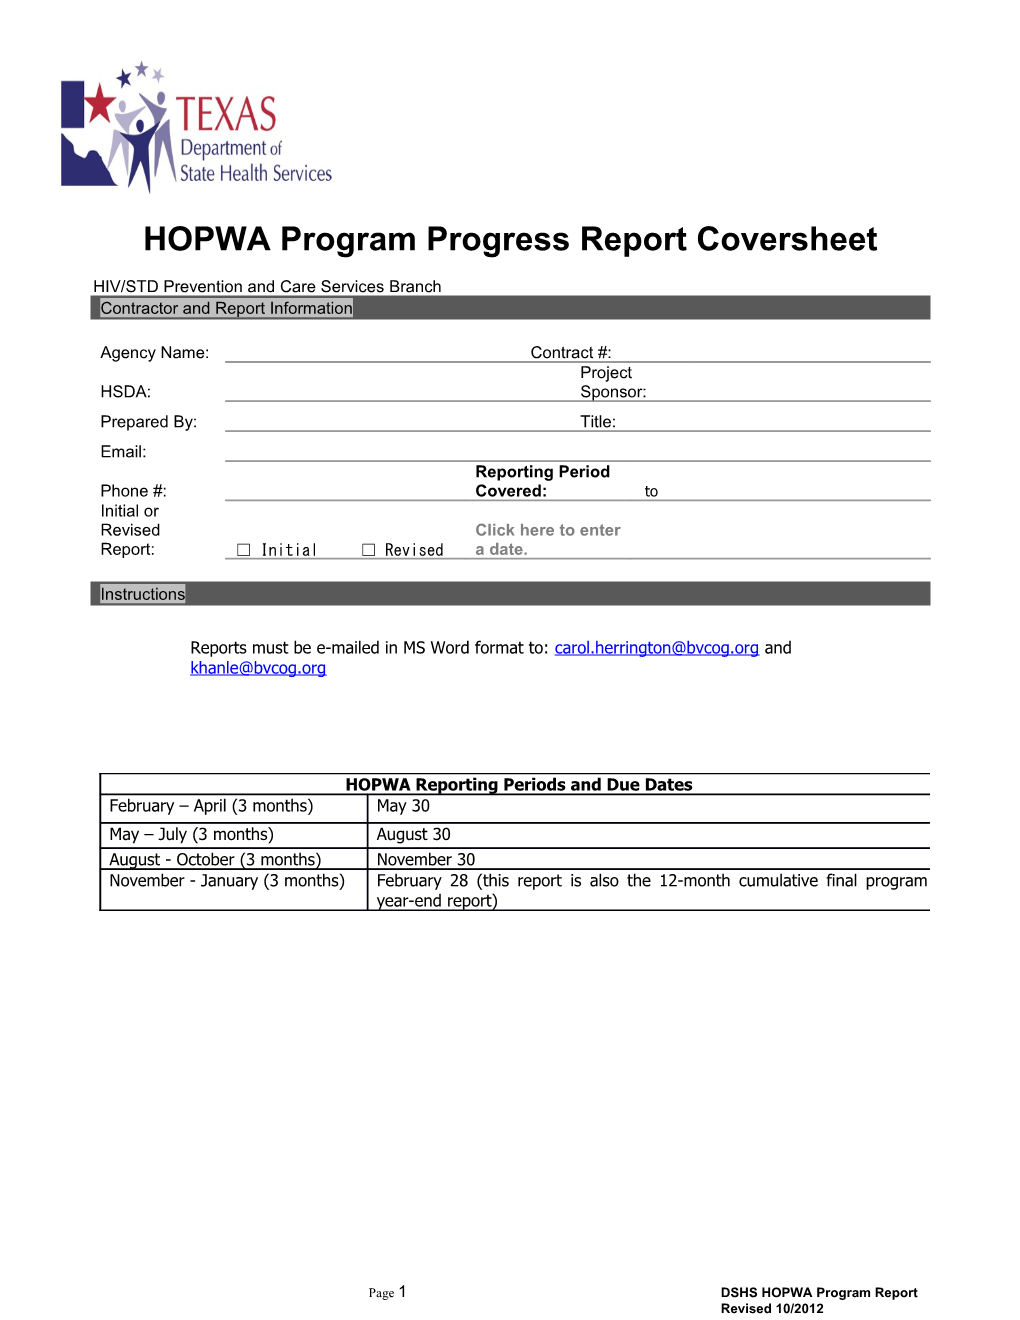 HOPWA Program Progress Report Coversheet